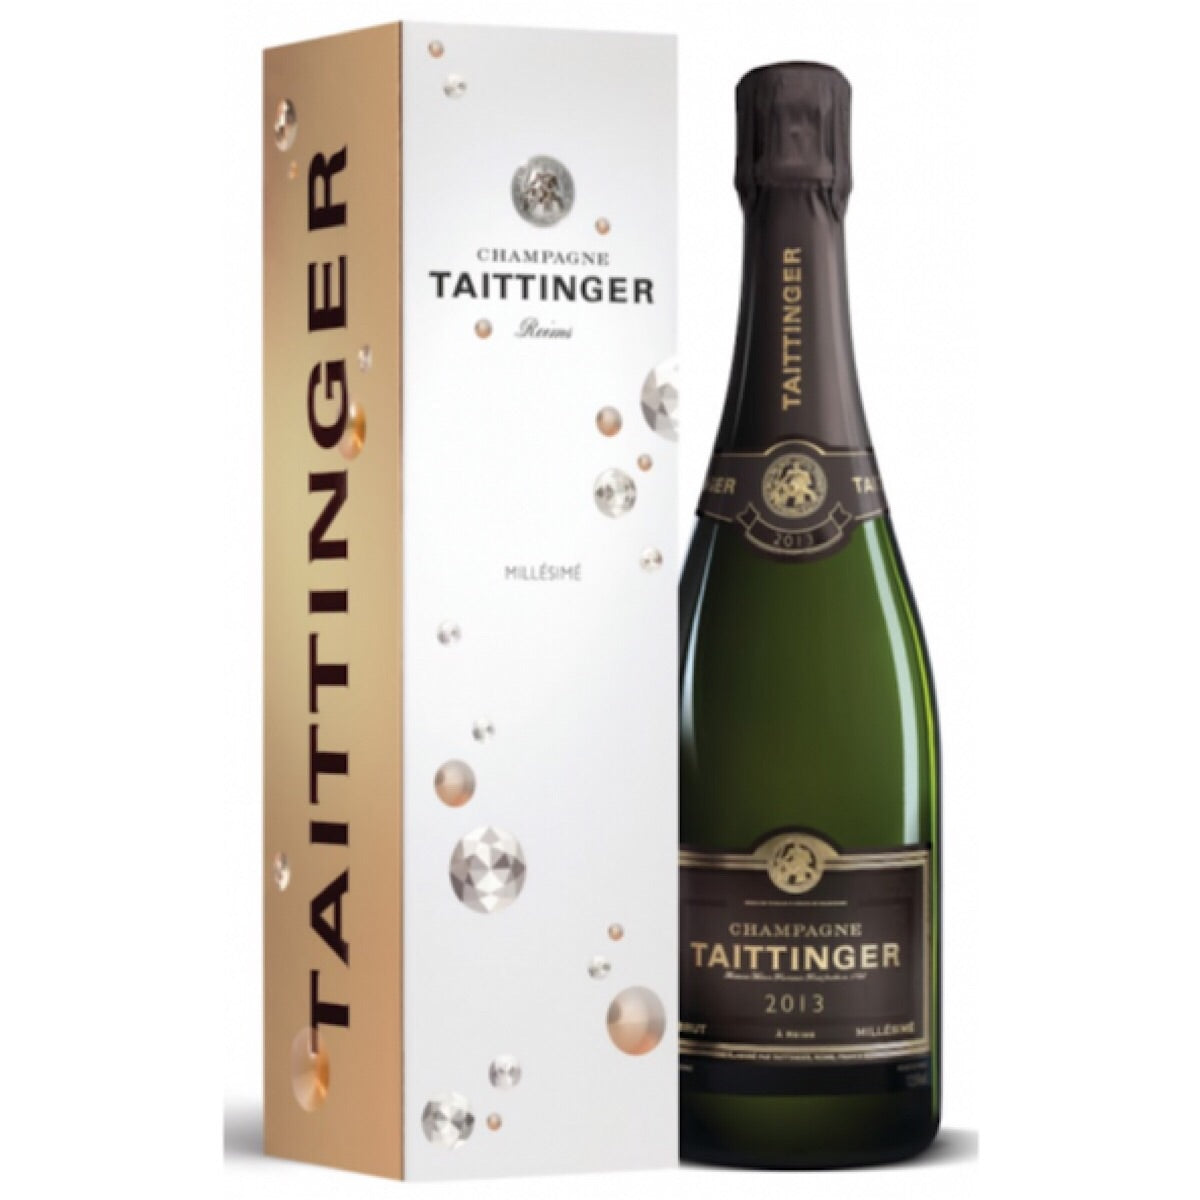 Taittinger Champagne Vintage Gift Box 6 Bottle Case75cl